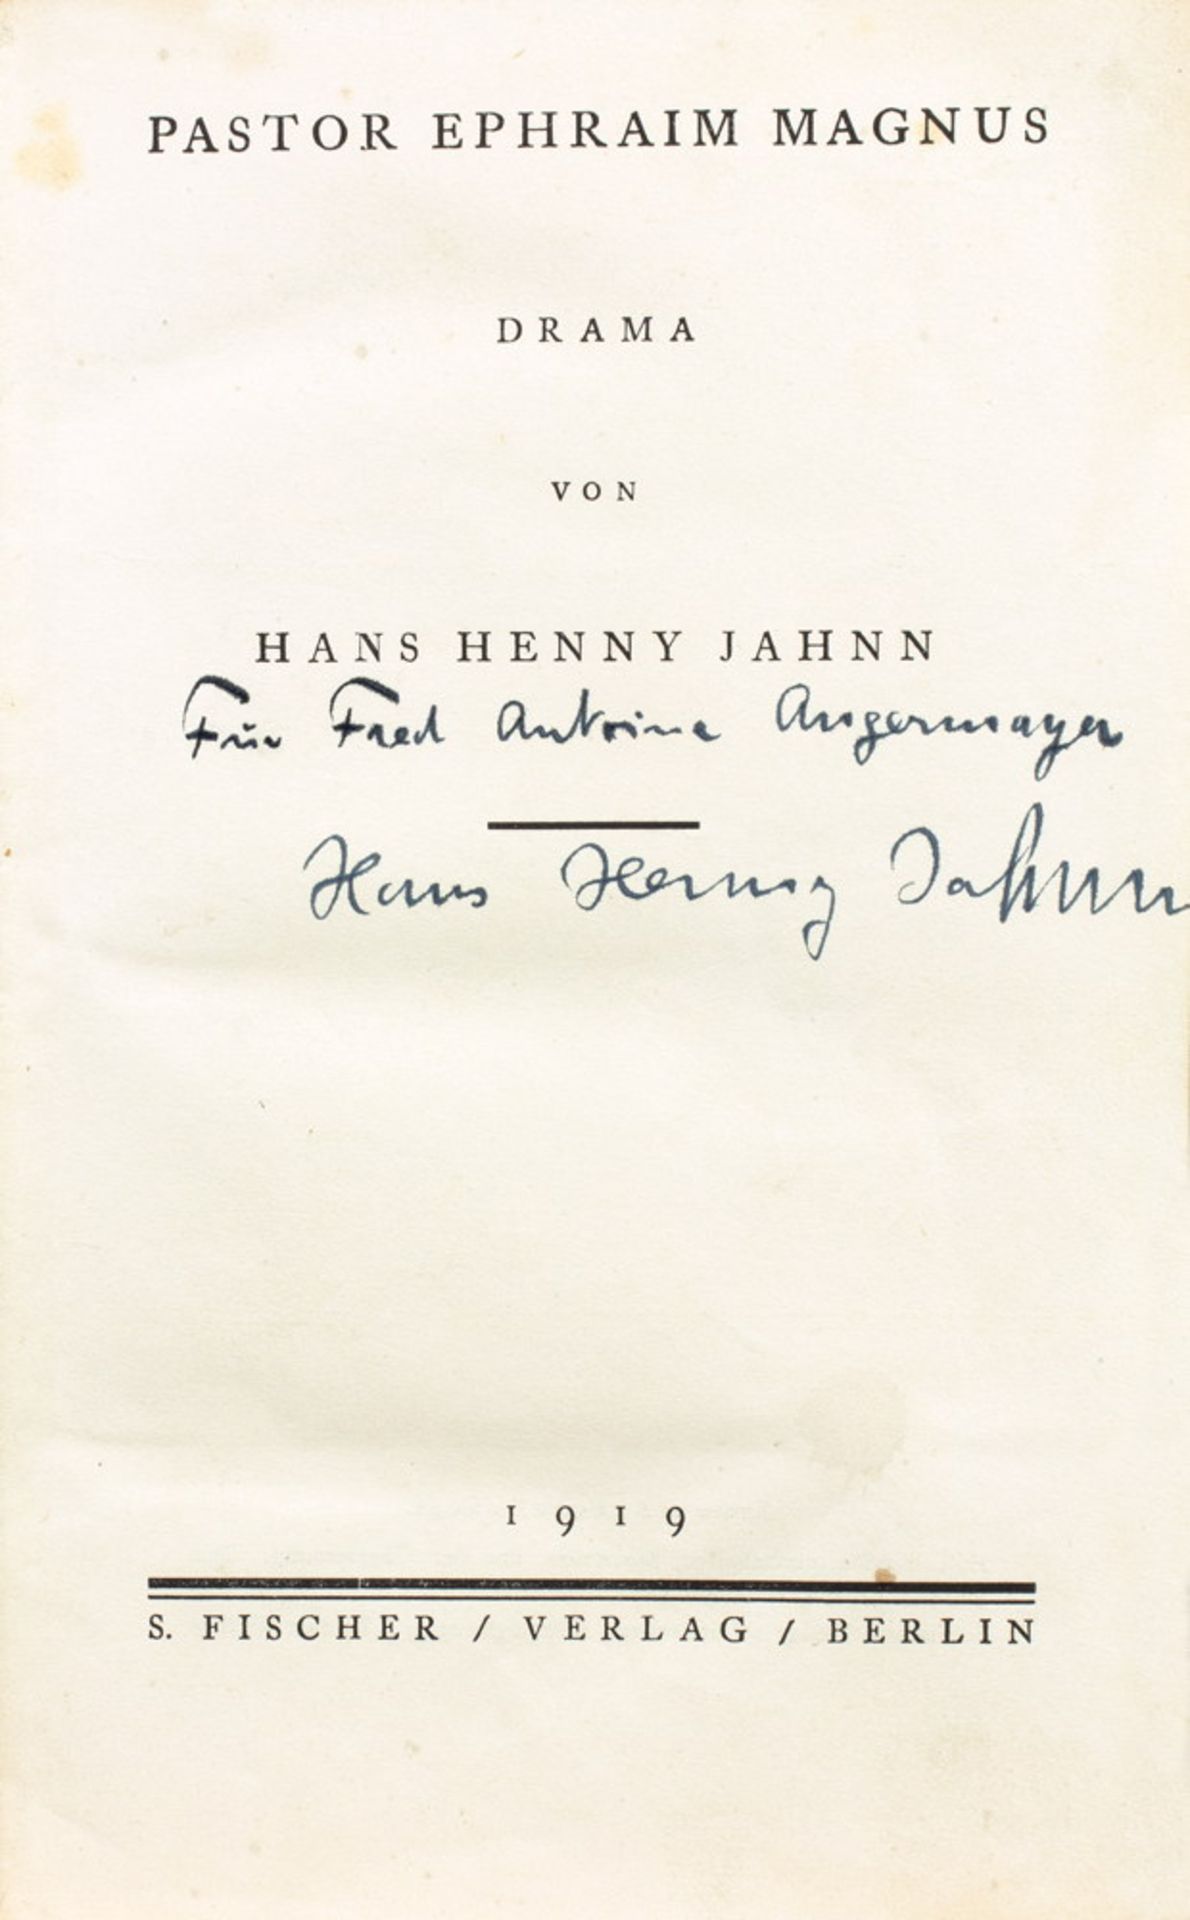 Hans Henny Jahnn. Pastor Ephraim Magnus.